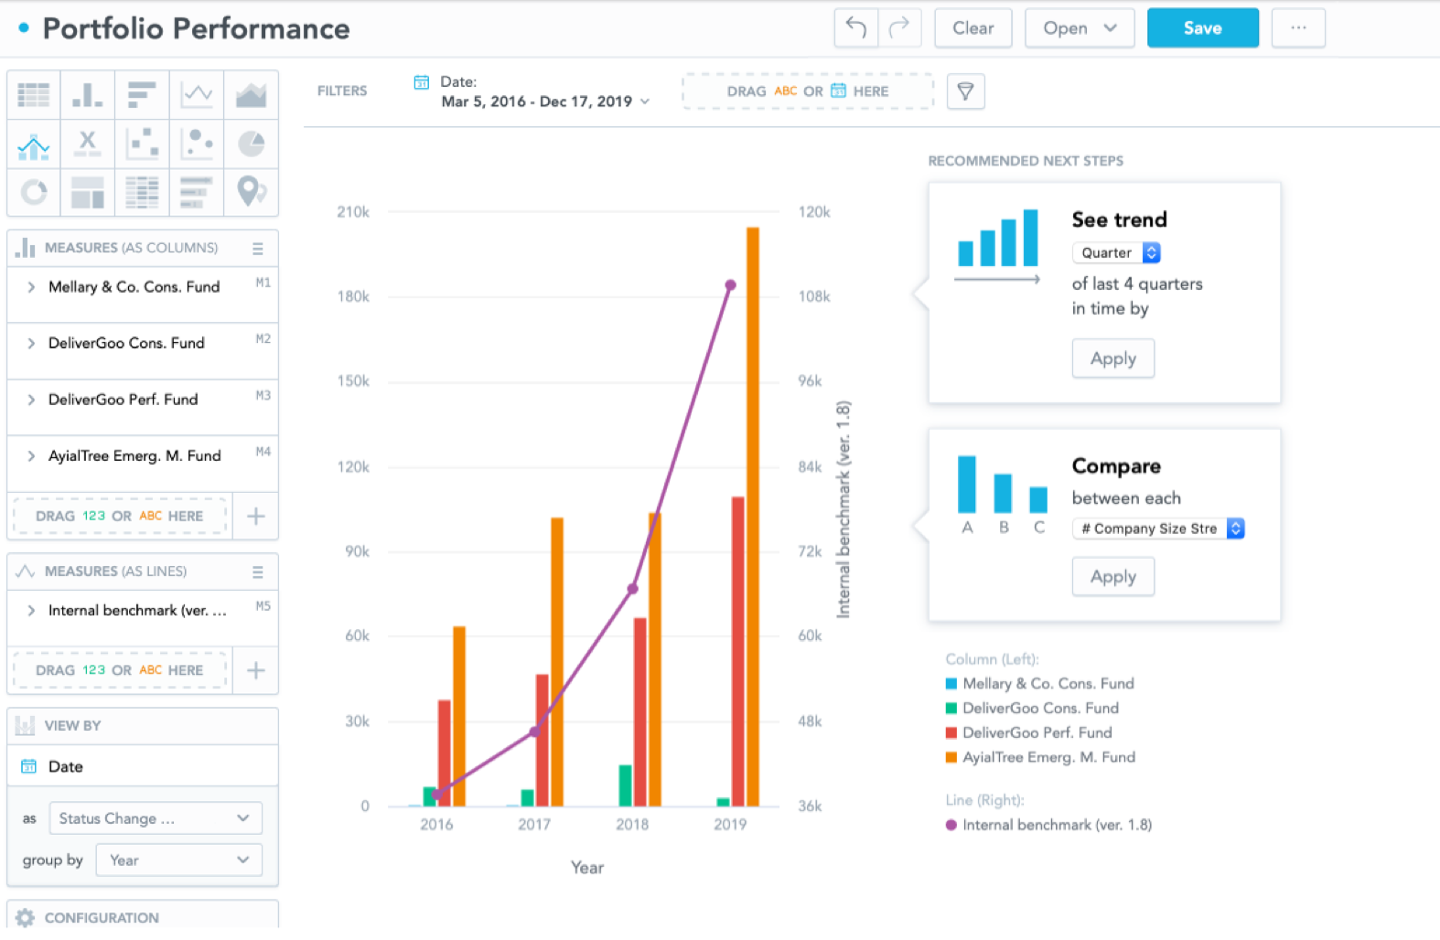 Image shows GoodData dashboard showing increased portfolio performance